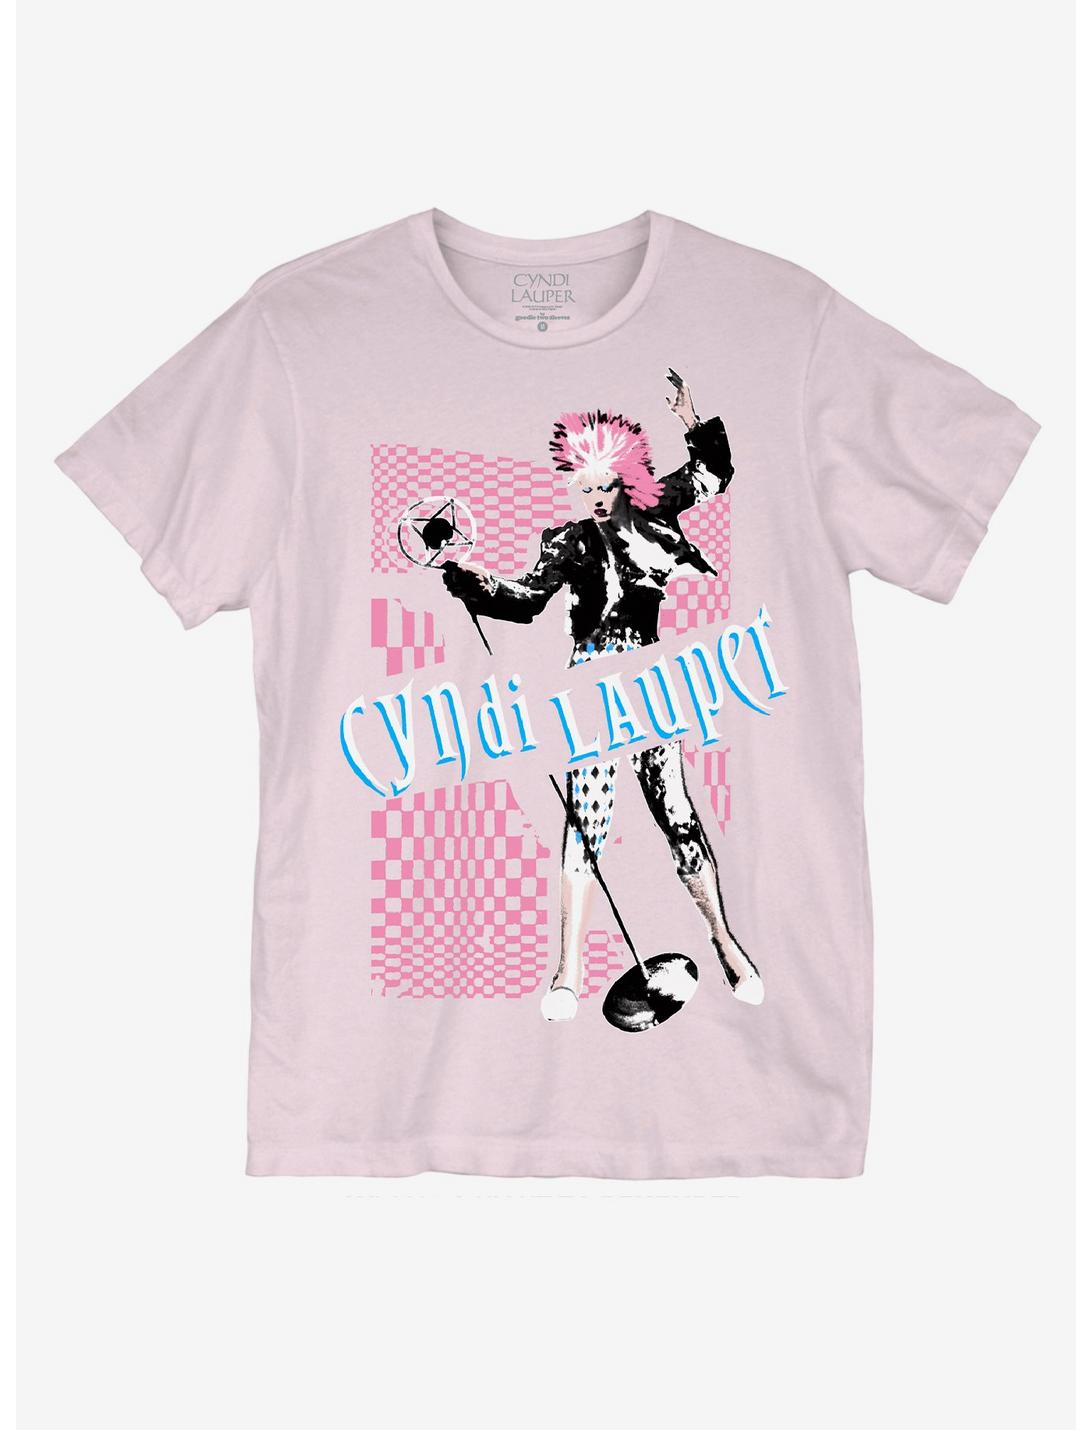 Cyndi Lauper Pink Checkered Boyfriend Fit Girls T-Shirt, BLACK, hi-res